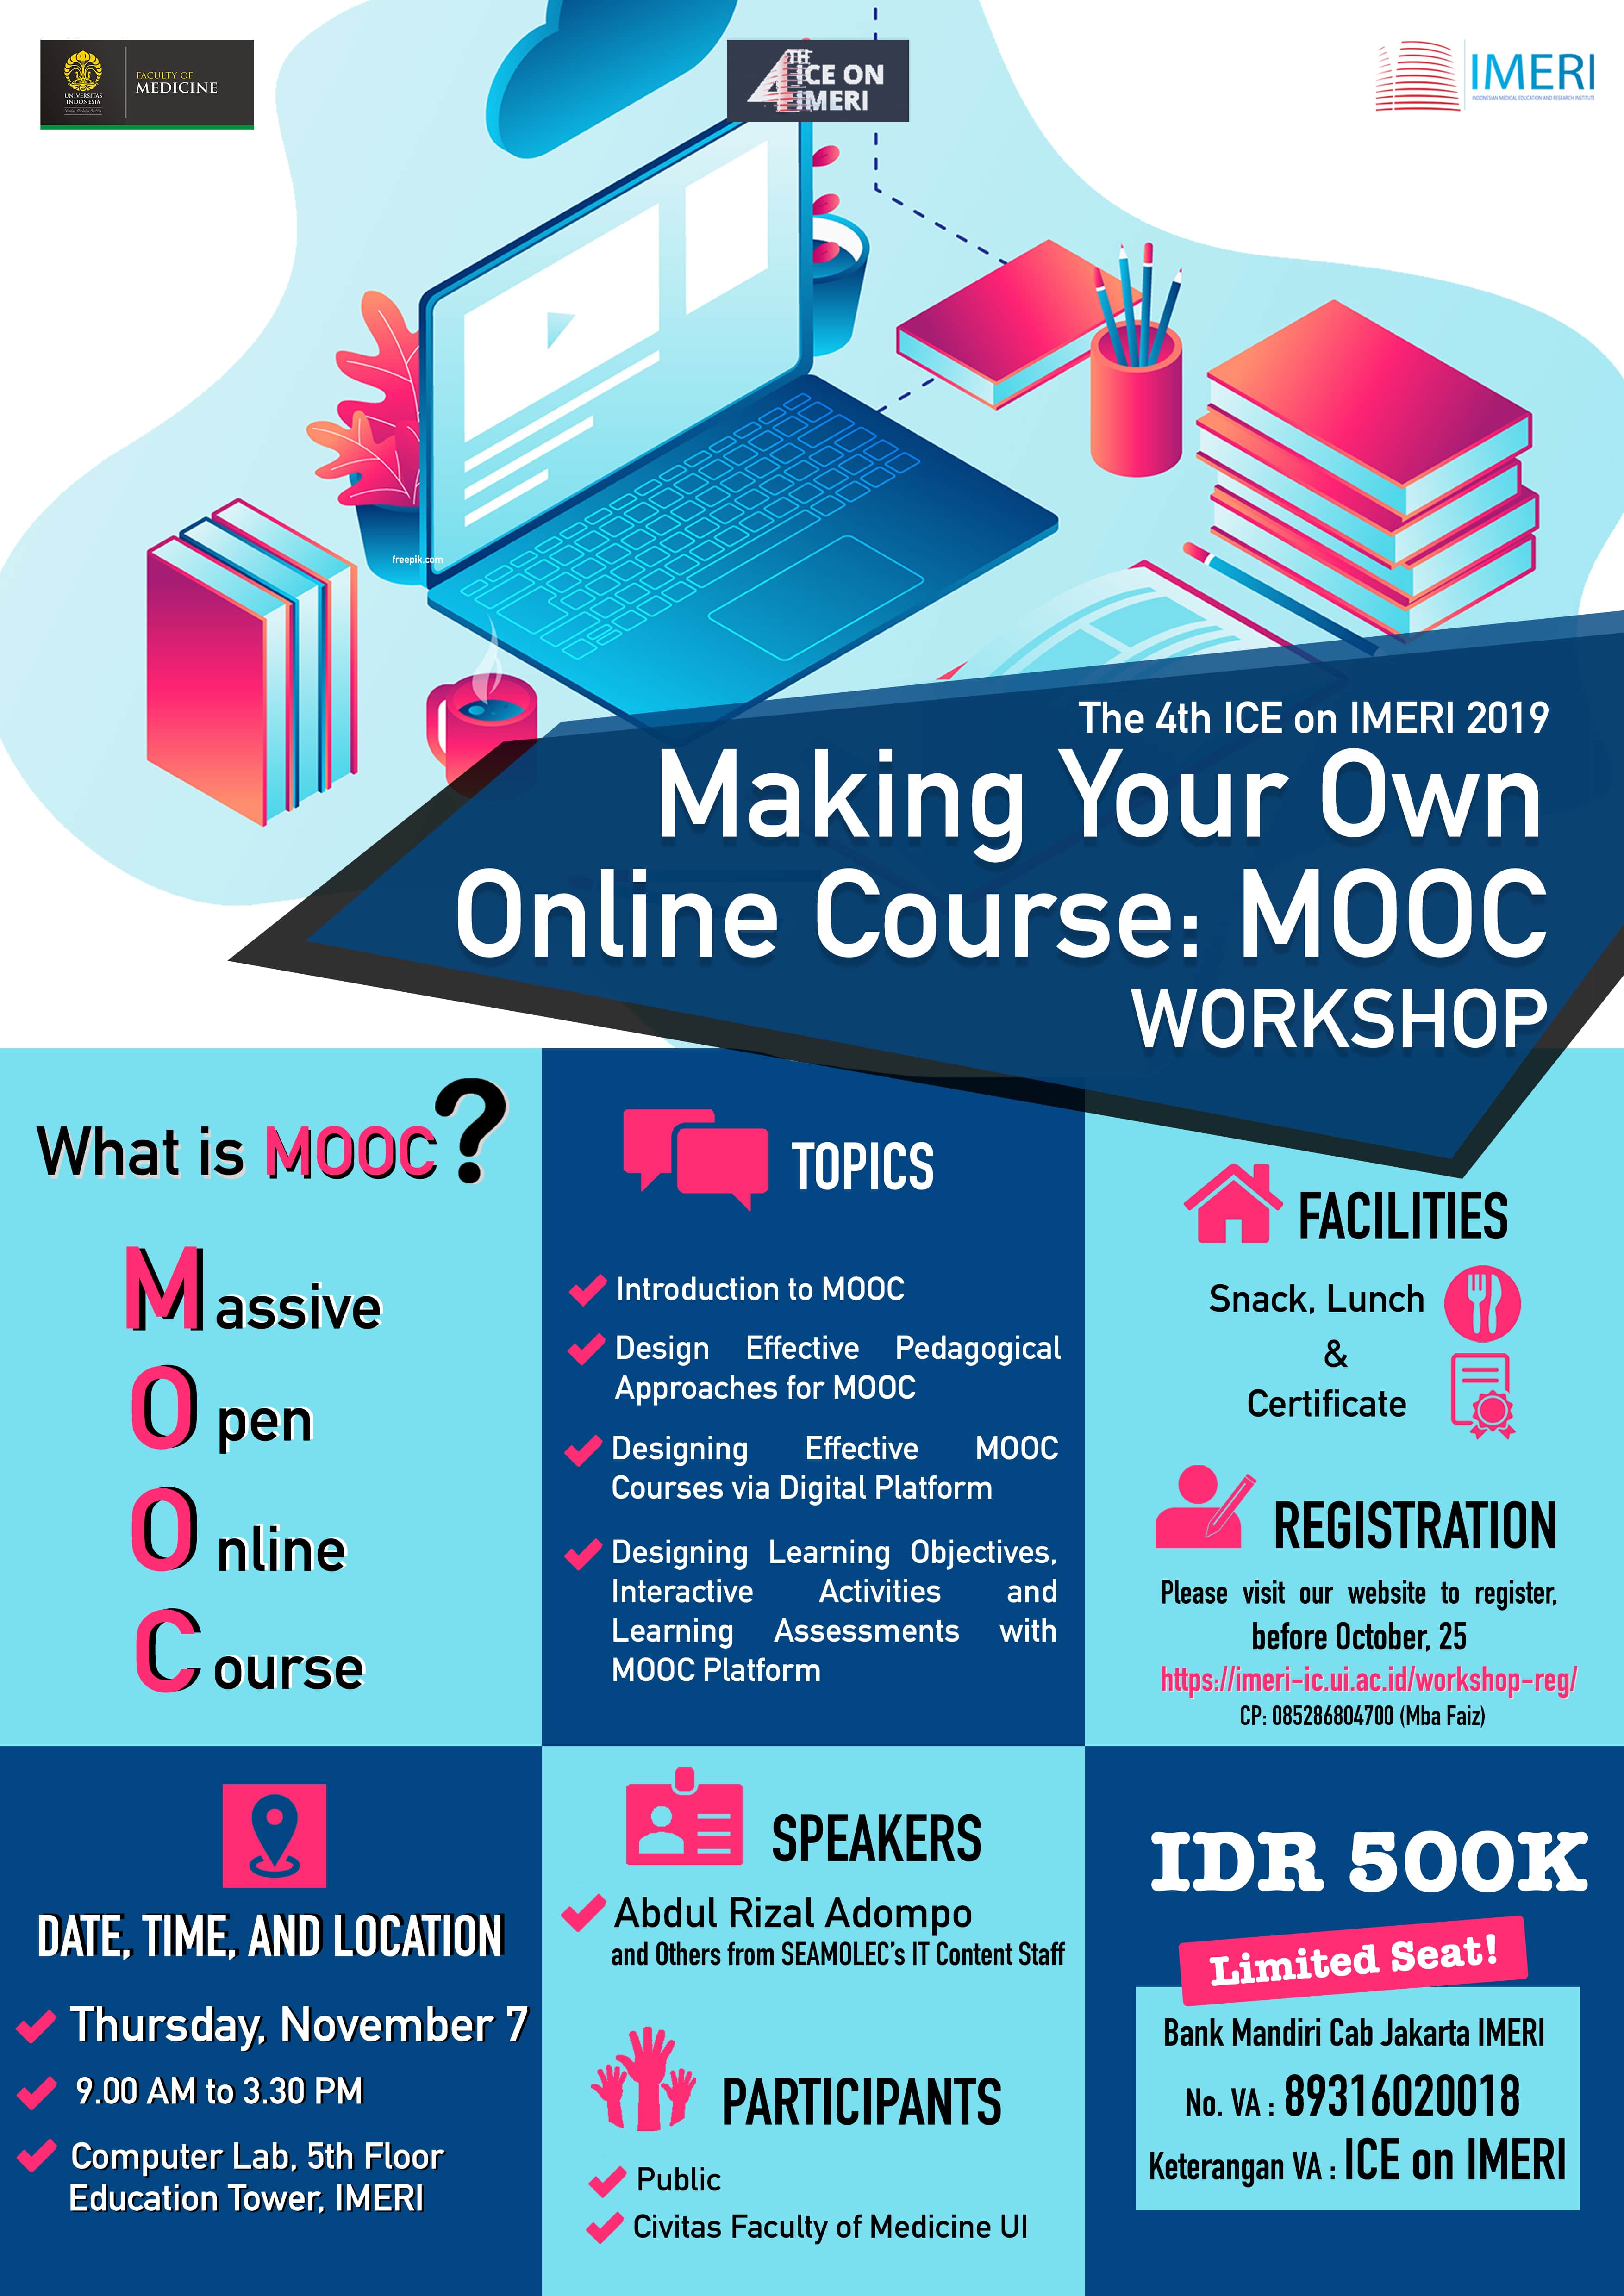 Online Course Imeri